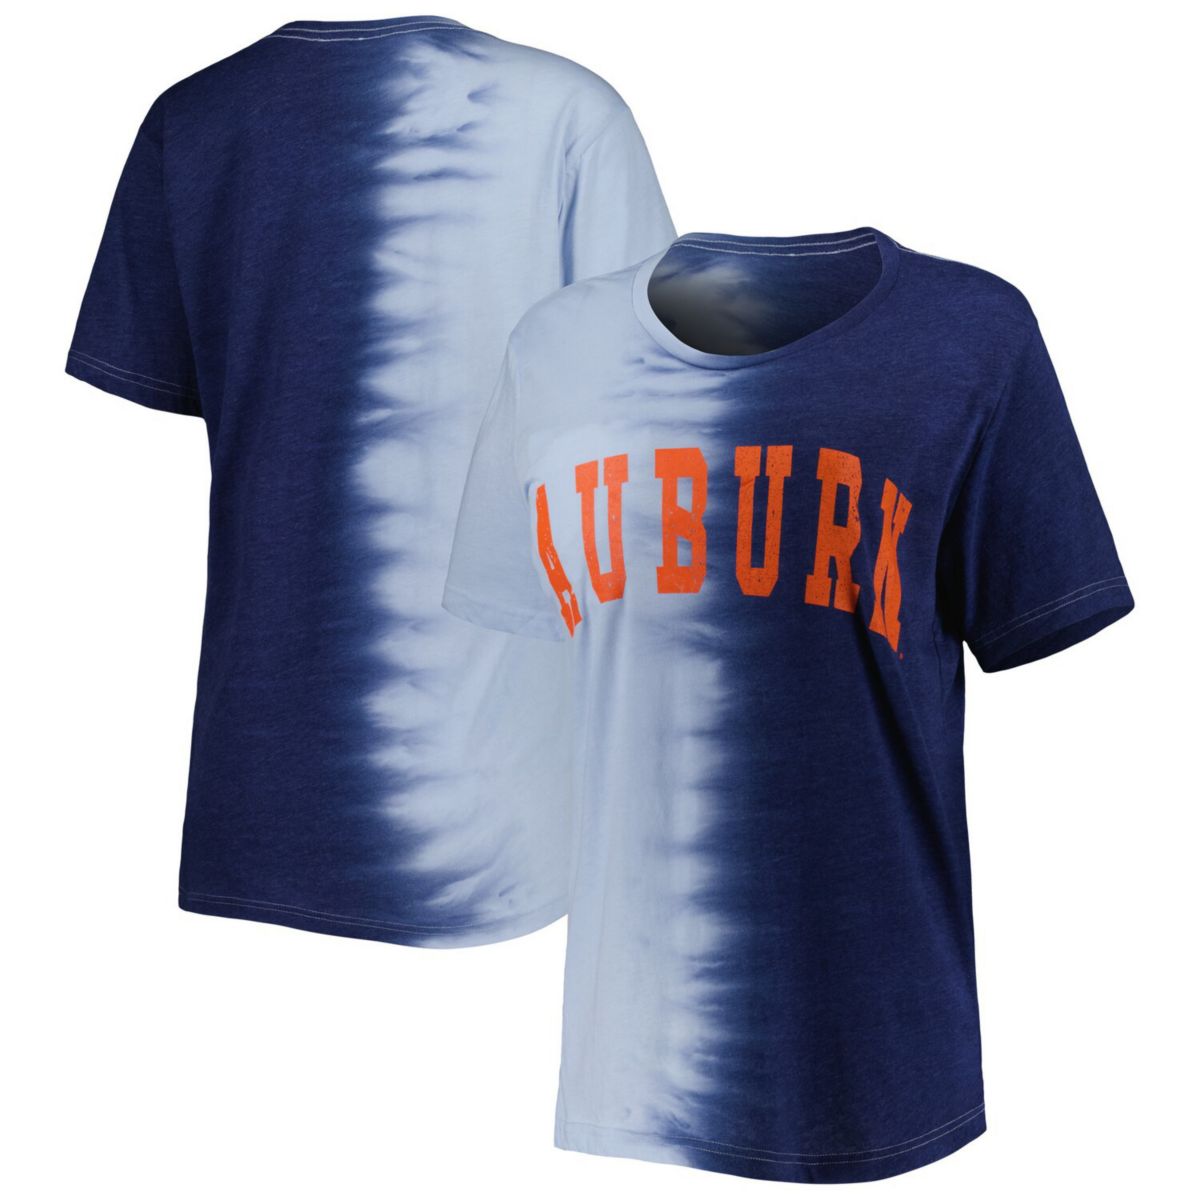 Женская футболка Gameday Couture темно-синего цвета Auburn Tigers Find Your Groove из сплит-краски Gameday Couture